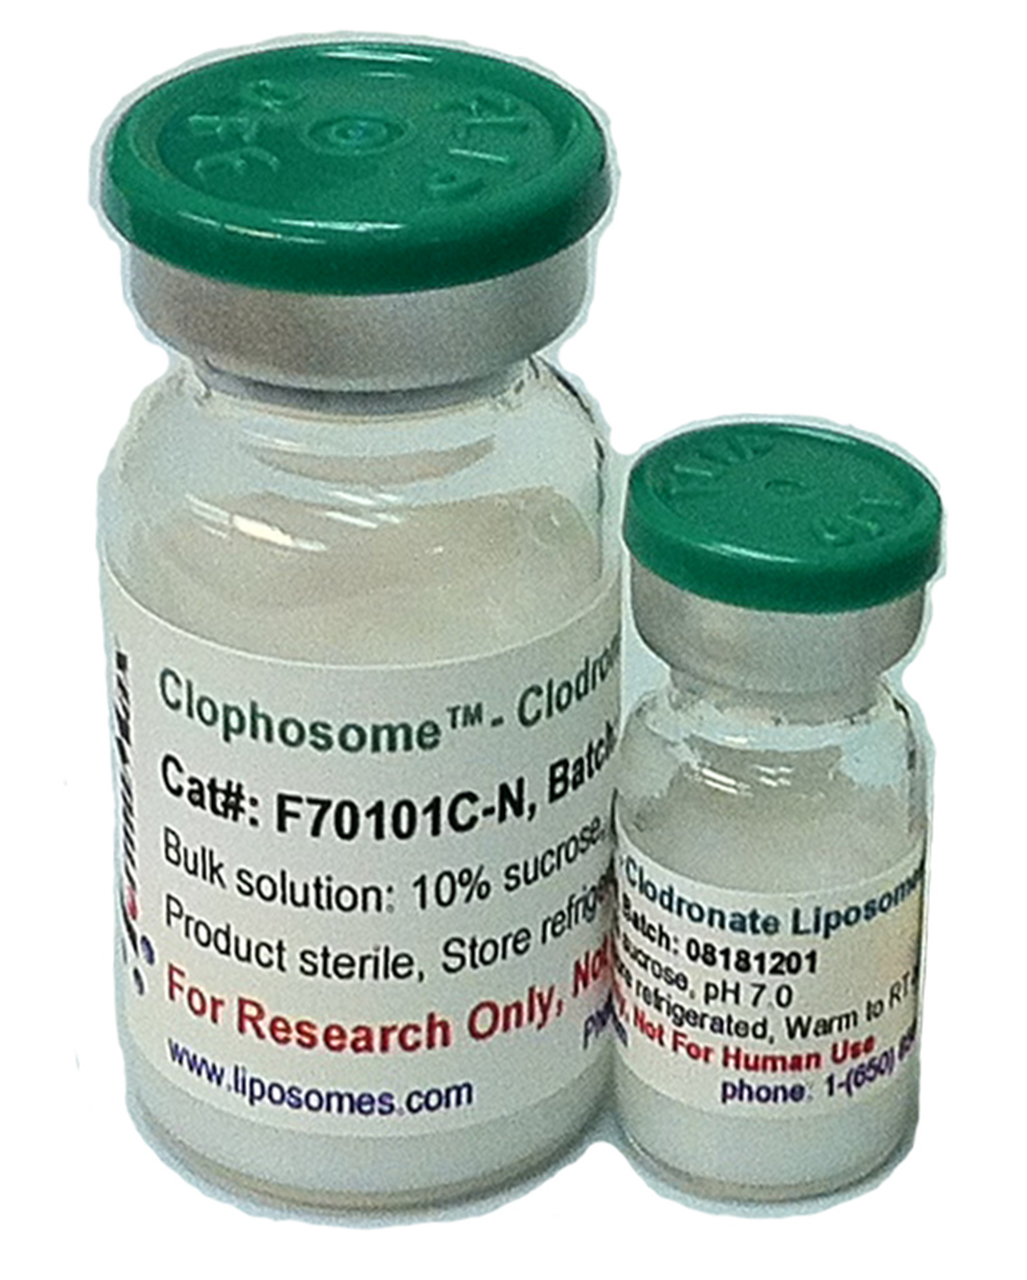 中性巨噬细胞清除剂 Clophosome®, Clodronate Liposomes (Neutral)